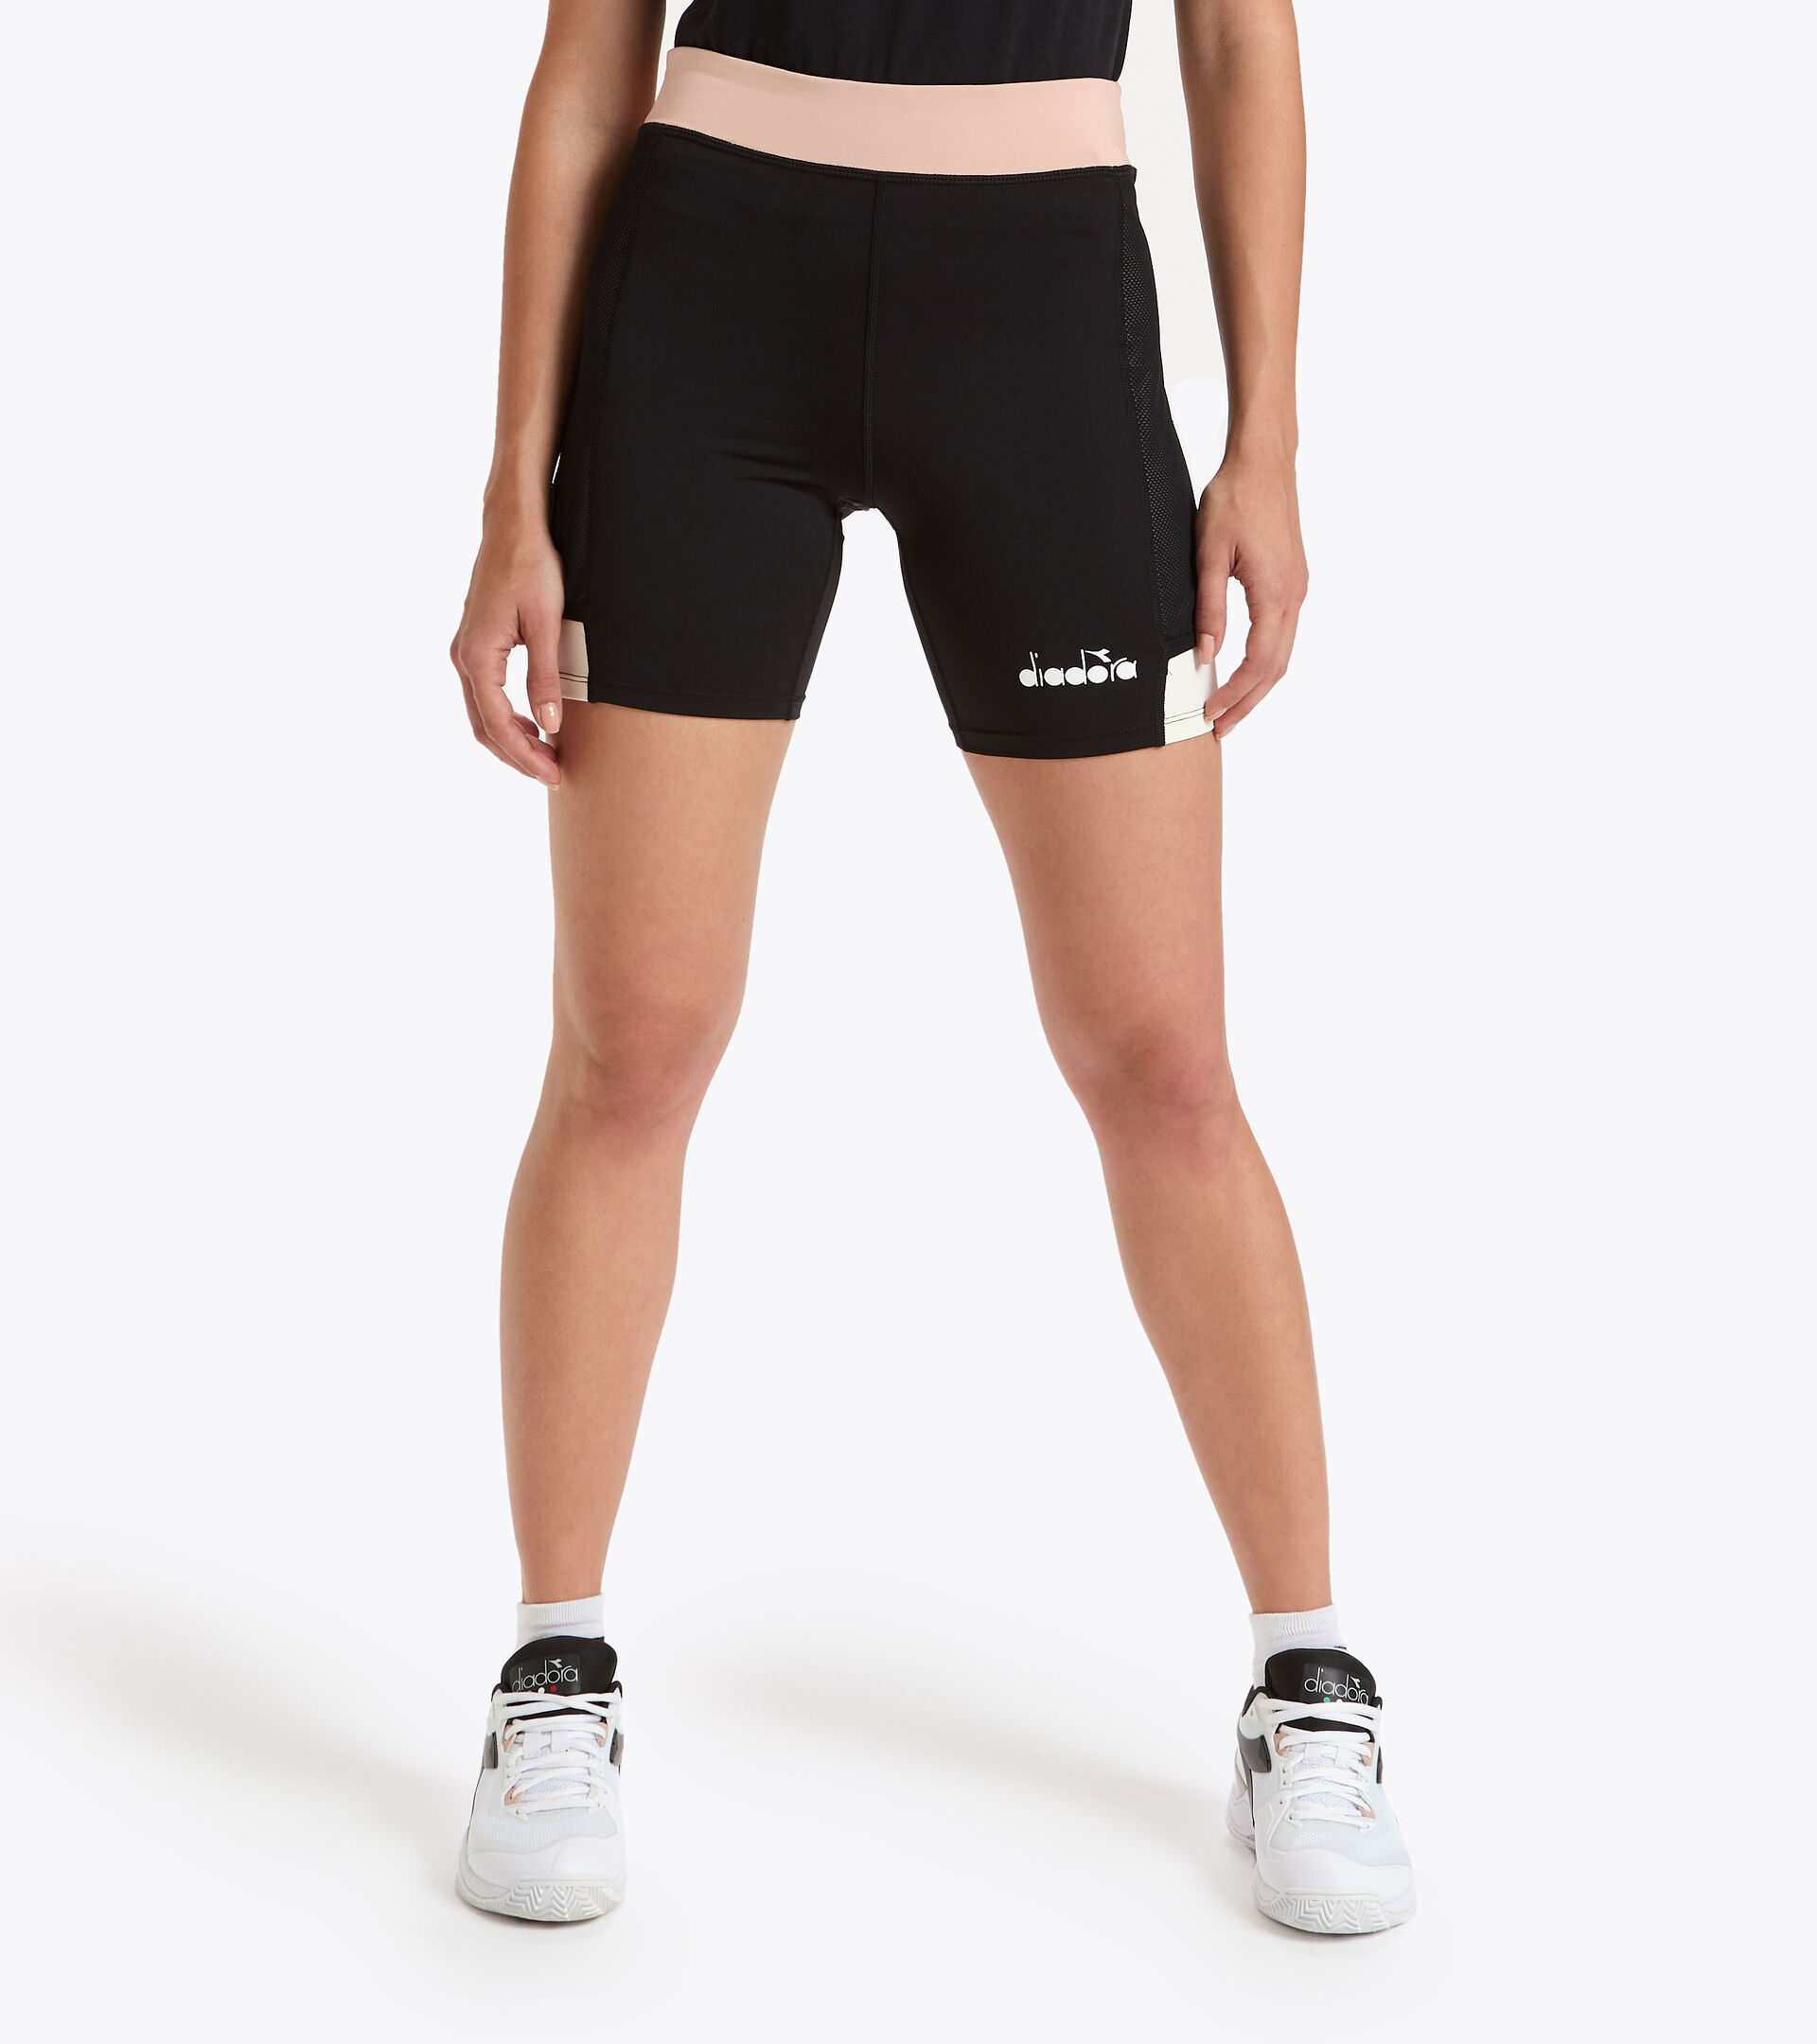 Tennis Shorts - Women L. SHORT TIGHTS POCKET BLACK/MAHOGANY ROSE - Diadora